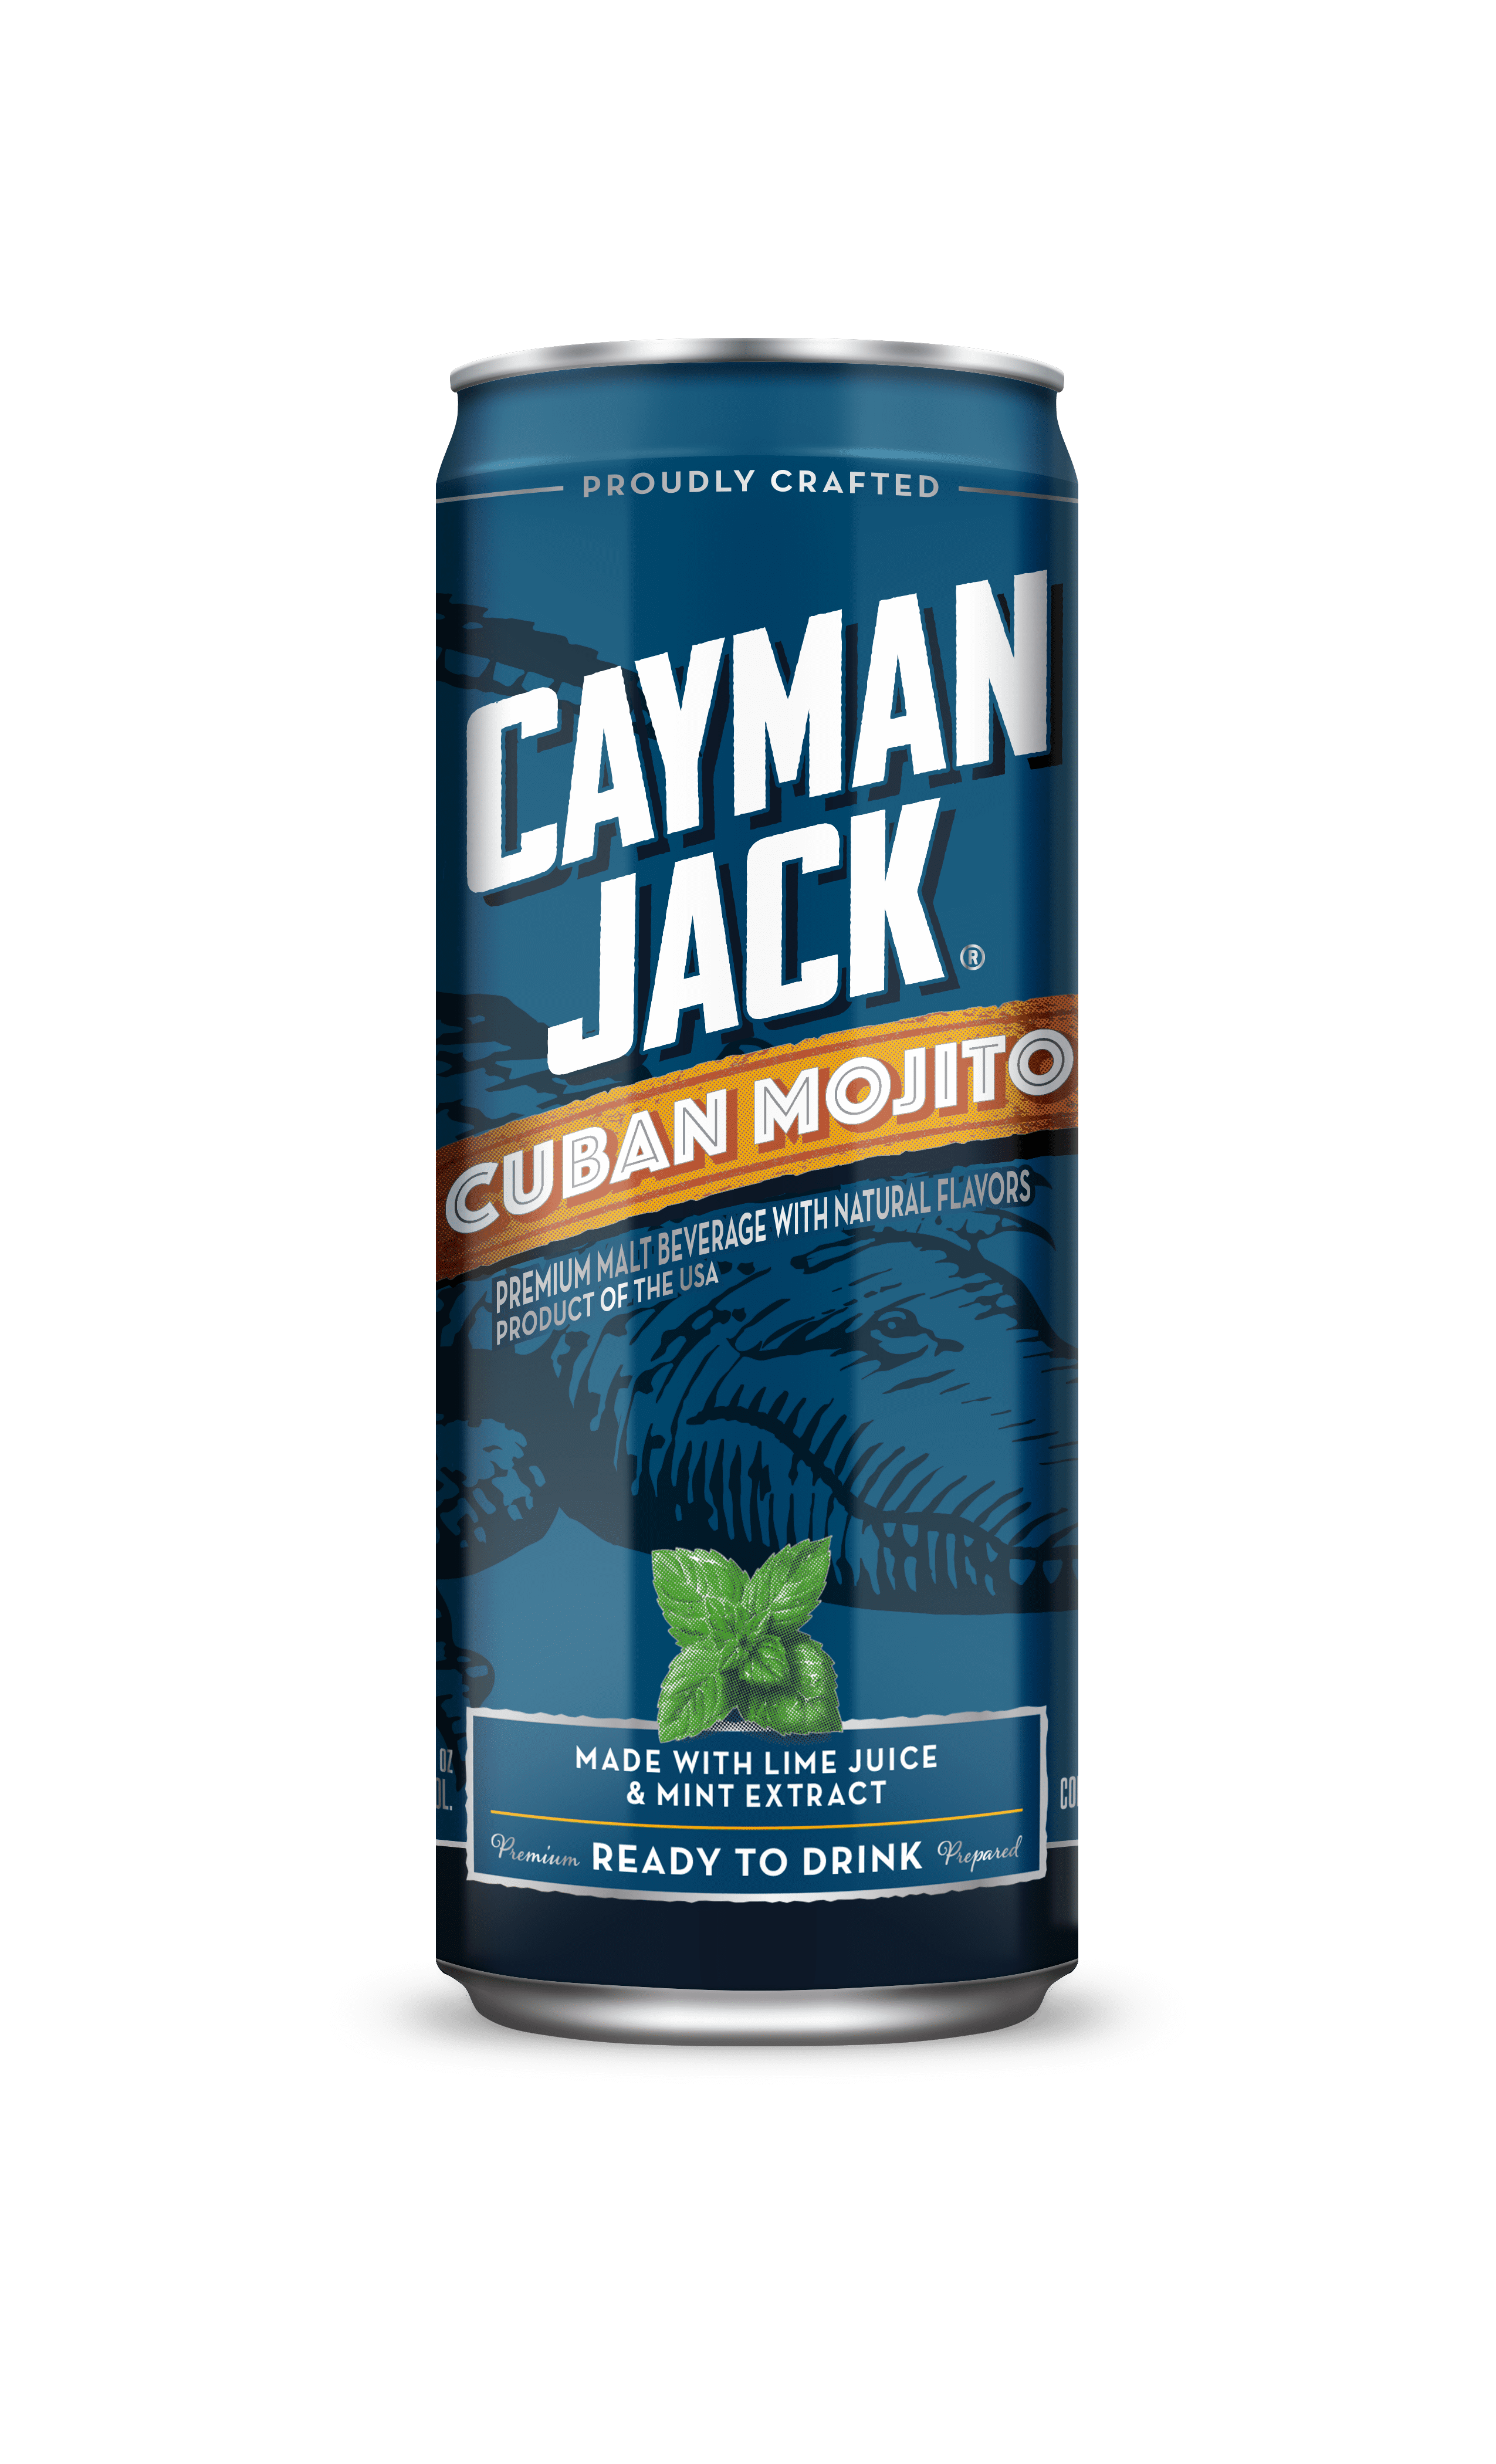 cayman-jack-variety-pack-12-pack-12-fl-oz-cans-home-garden